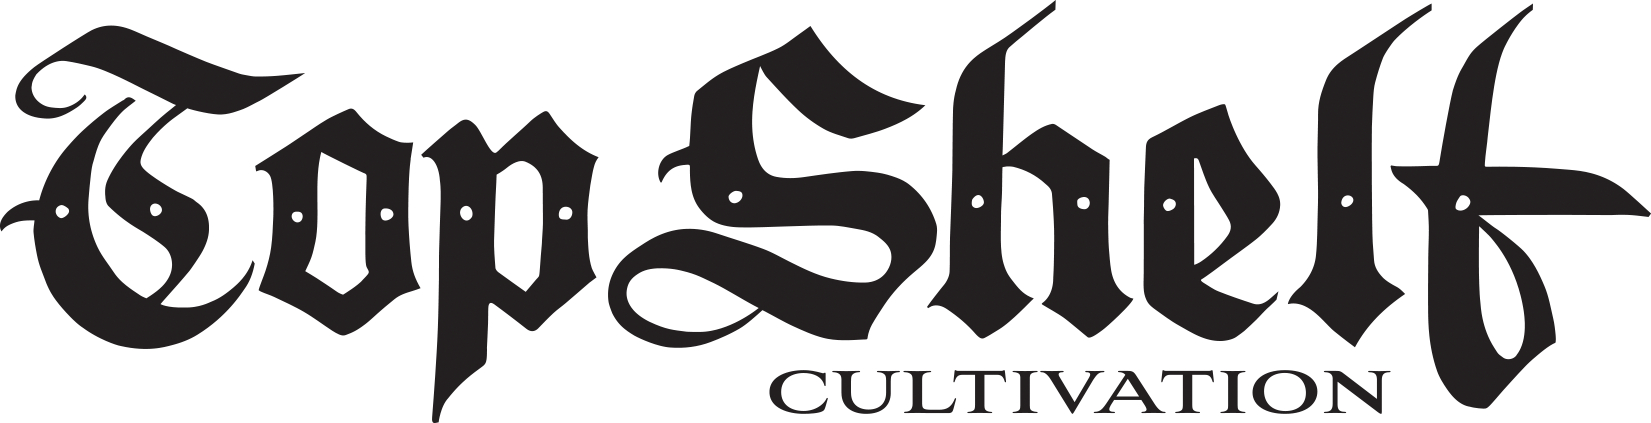 Top Shelf Cultivation black logo